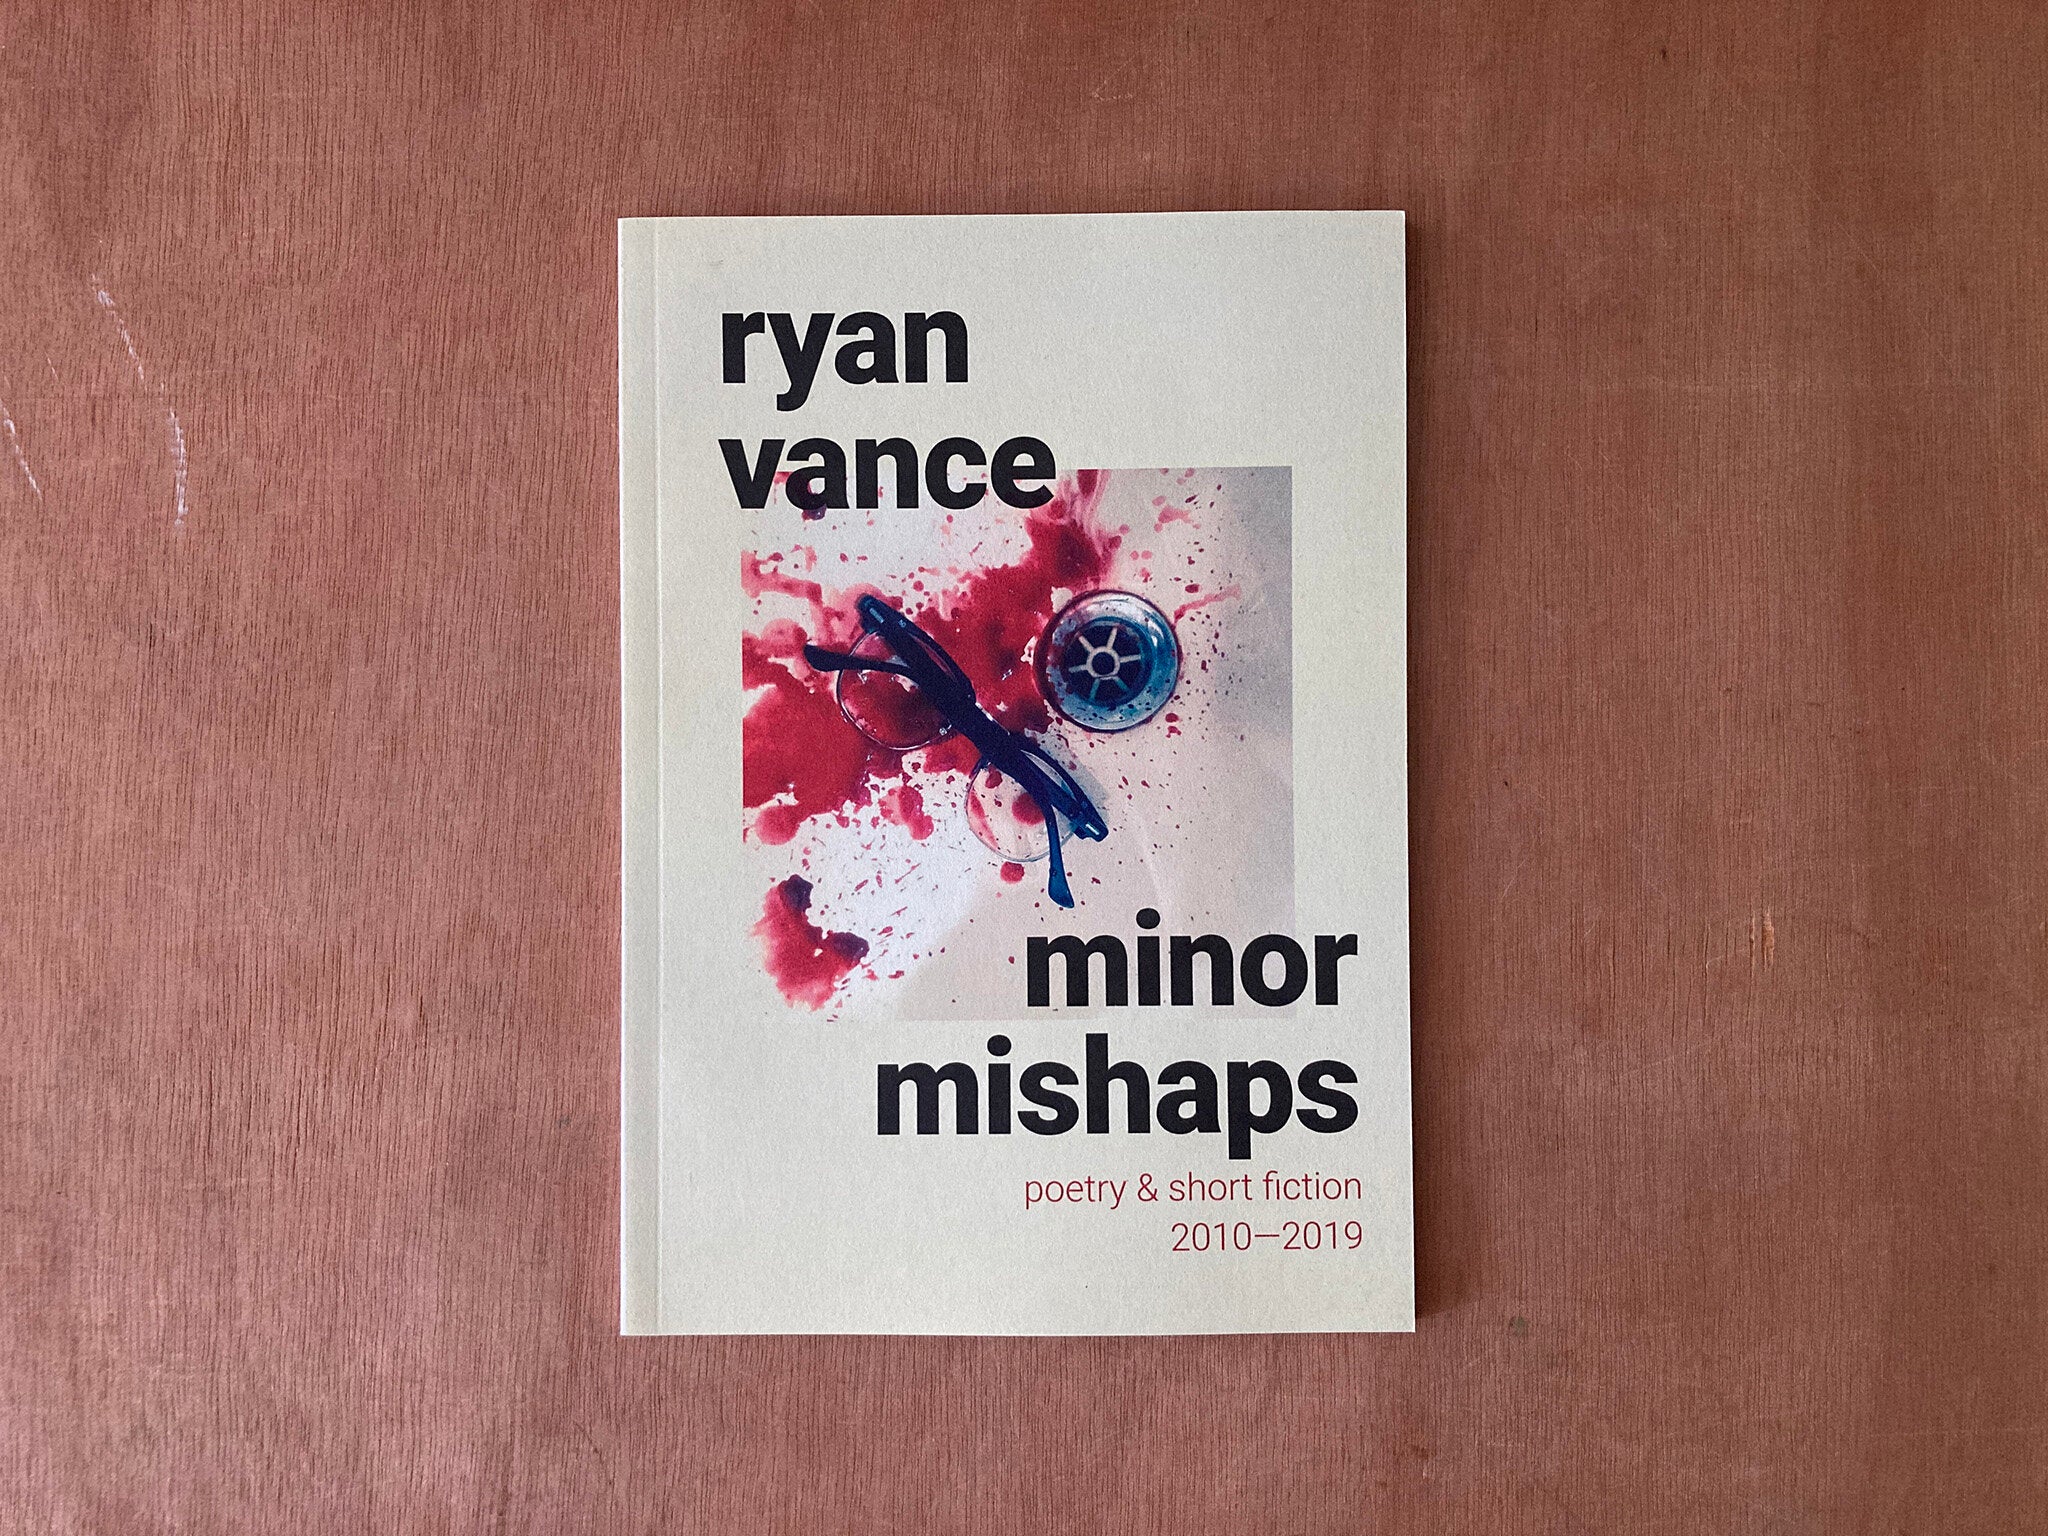 MINOR MISHAPS by Ryan Vance